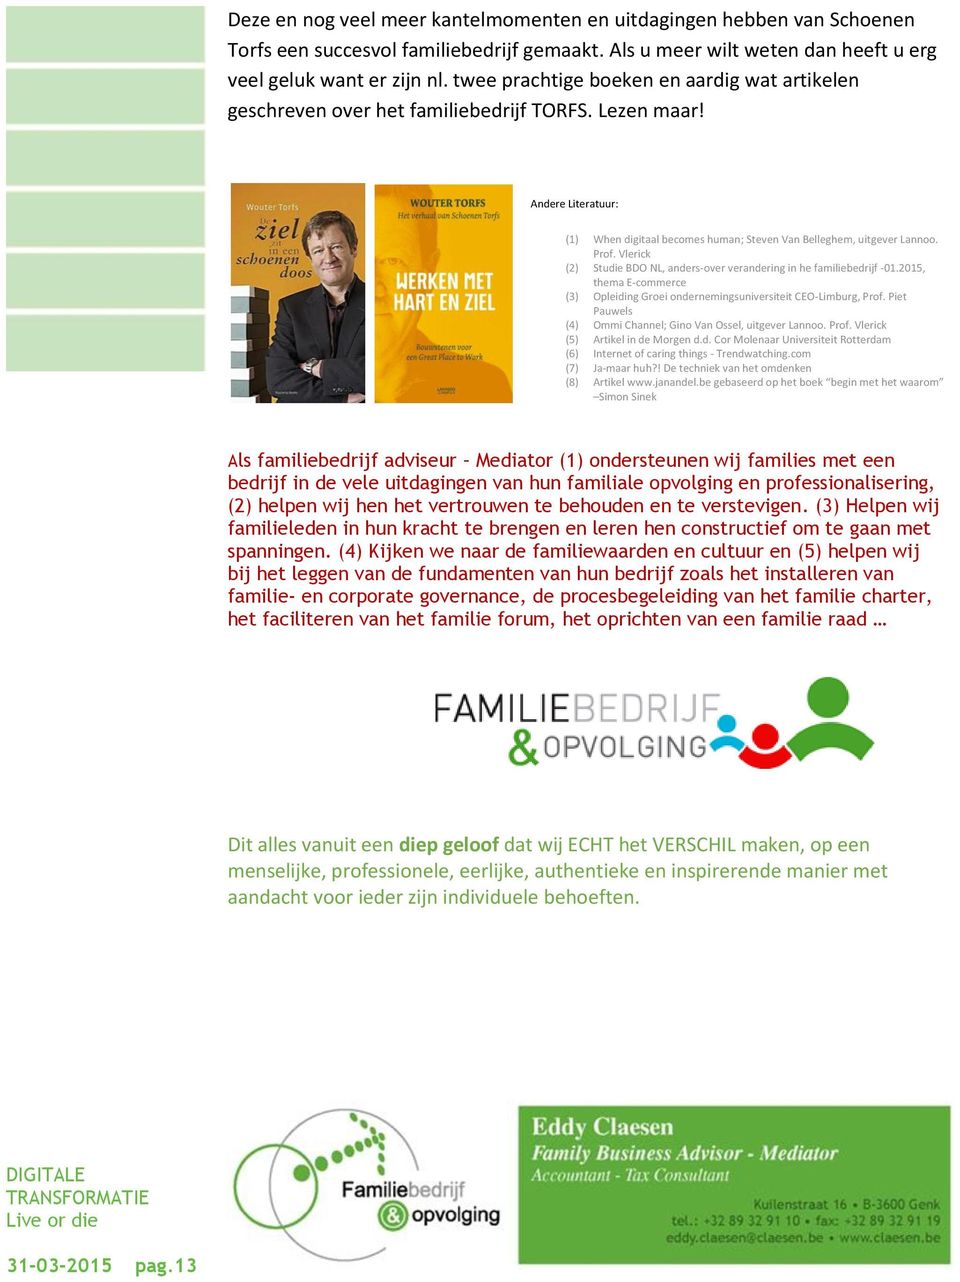 Vlerick (2) Studie BDO NL, anders-over verandering in he familiebedrijf -01.2015, thema E-commerce (3) Opleiding Groei ondernemingsuniversiteit CEO-Limburg, Prof.